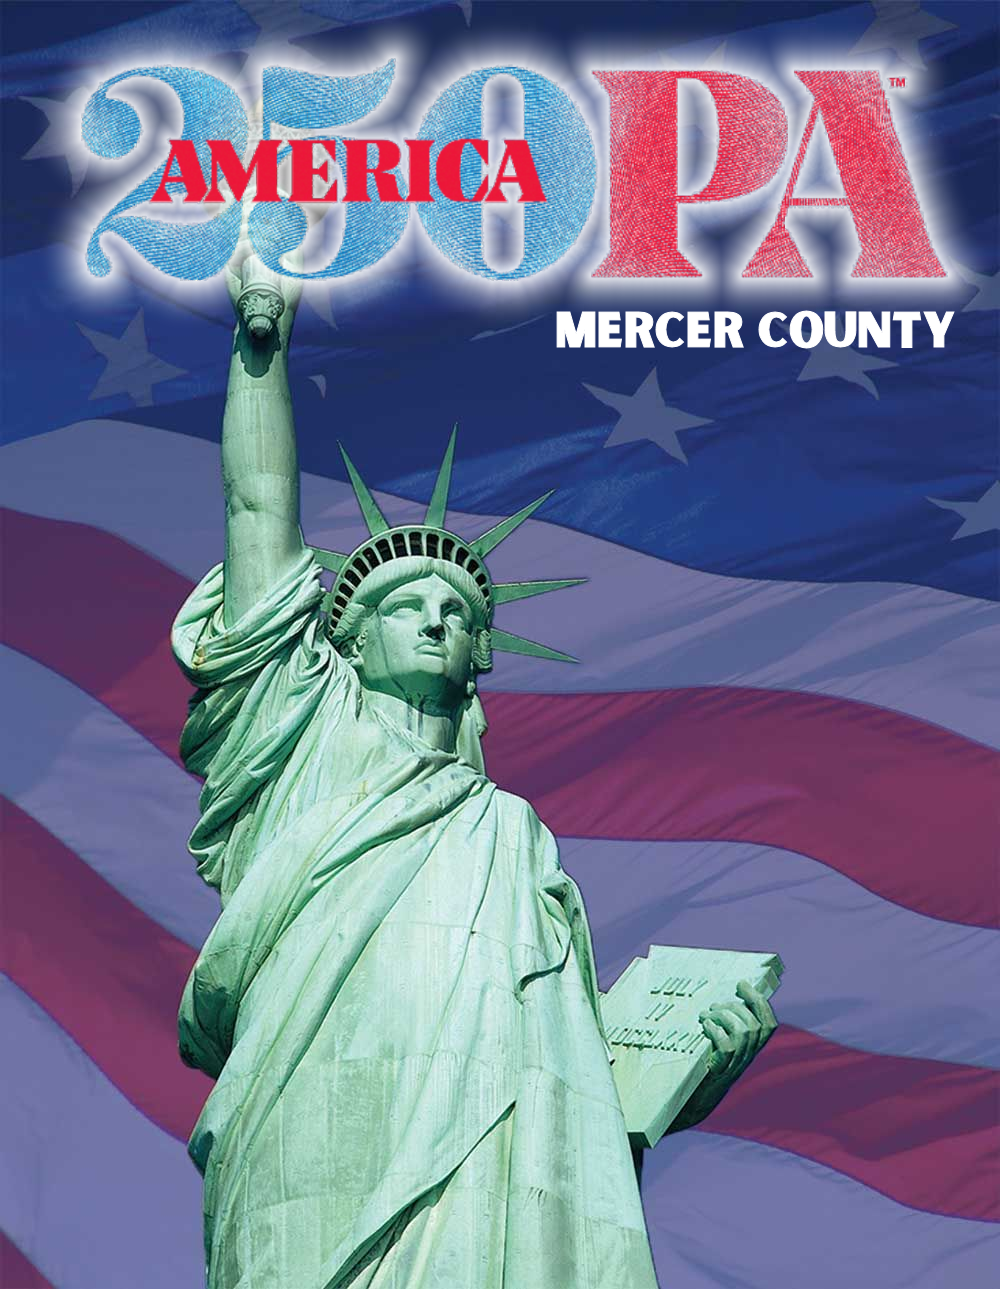 America 250 PA Logo